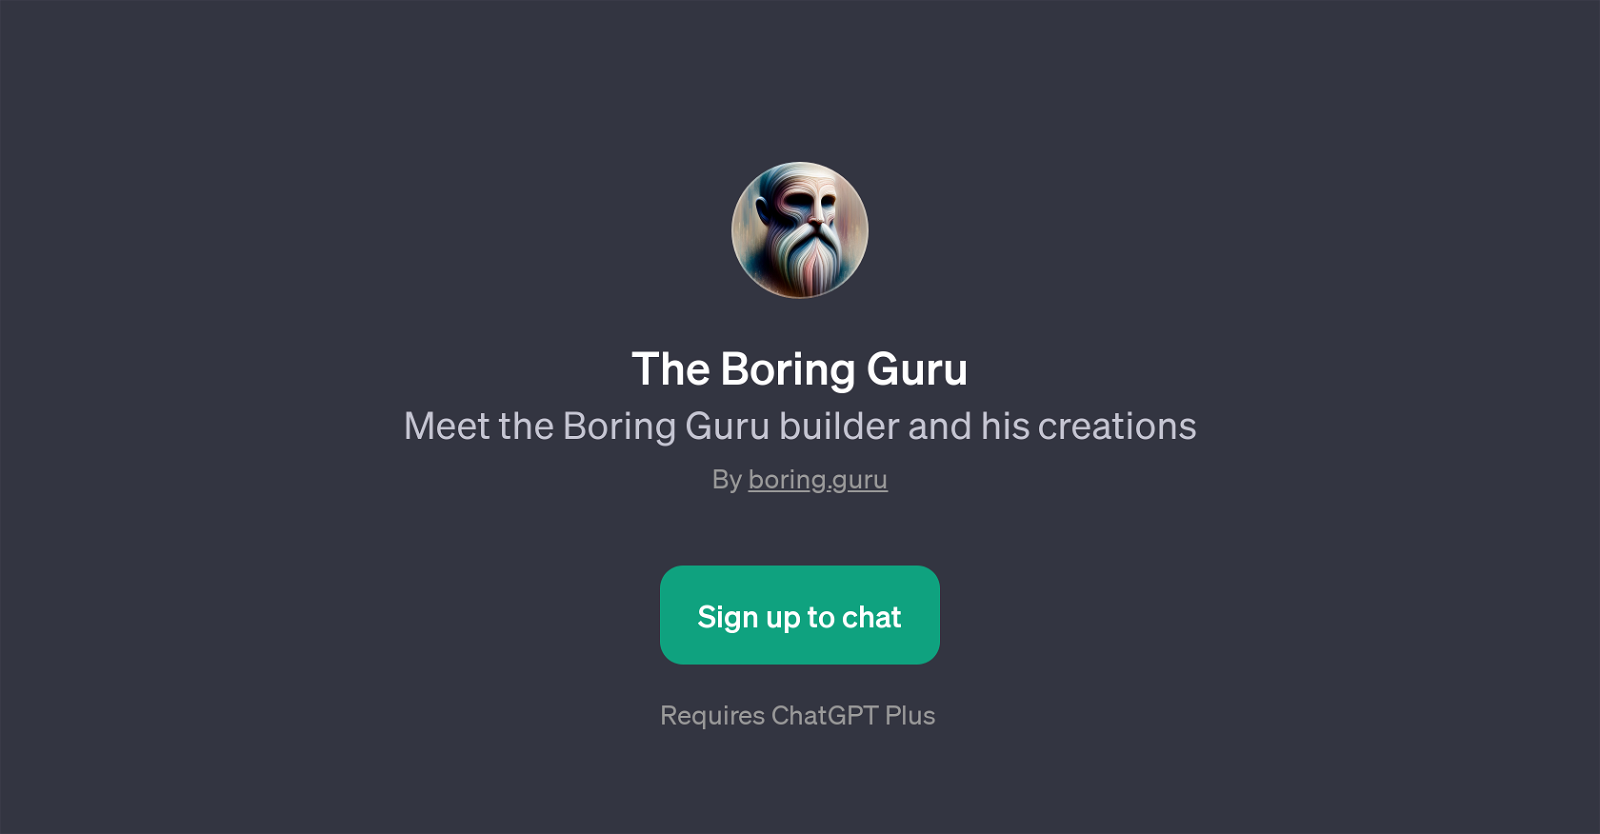 The Boring Guru website